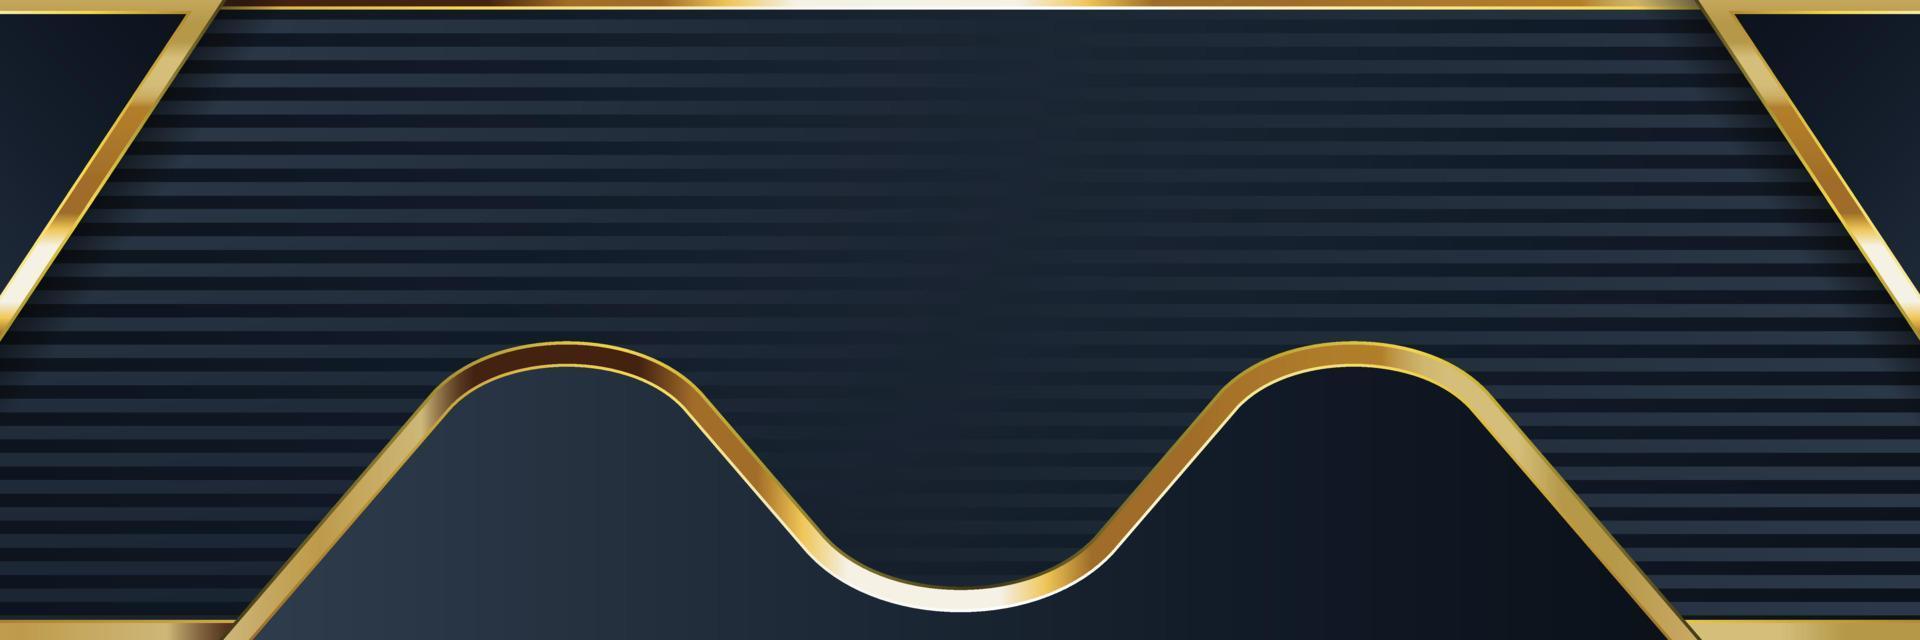 design de banner de ouro com luxo de ouro de estilo moderno minimalista vetor